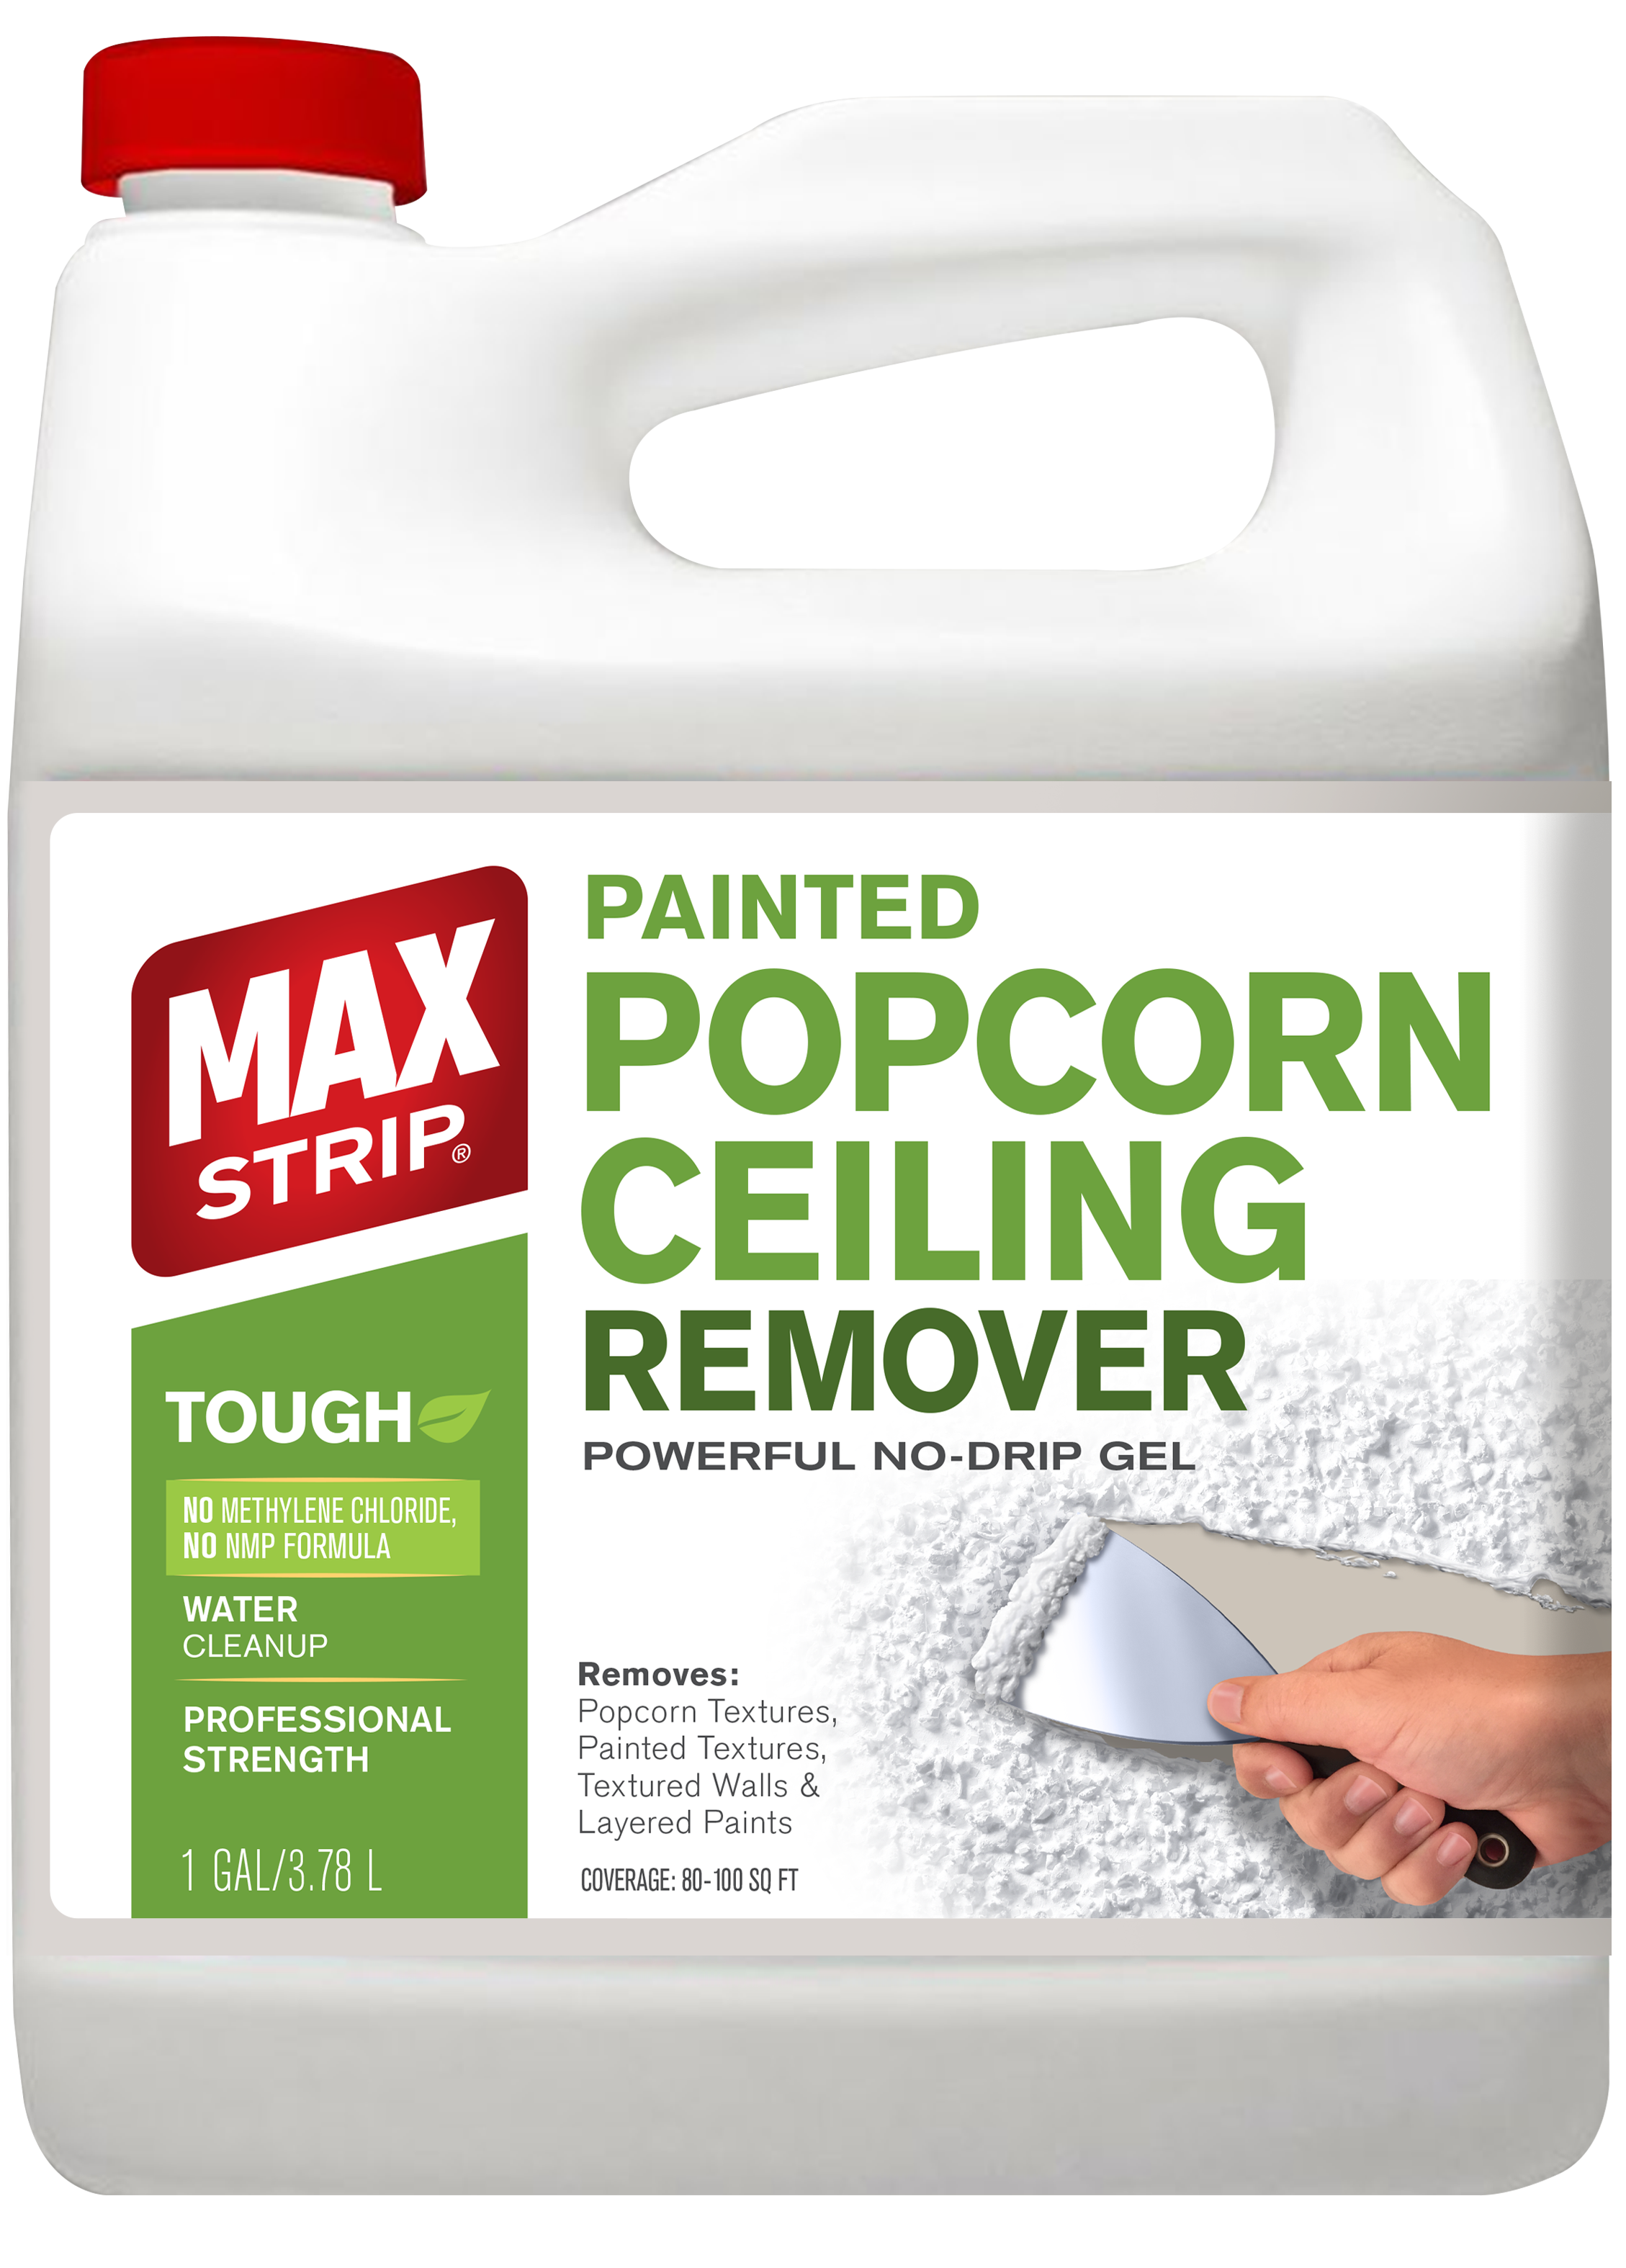 Max Strip Popcorn Ceiling Remover